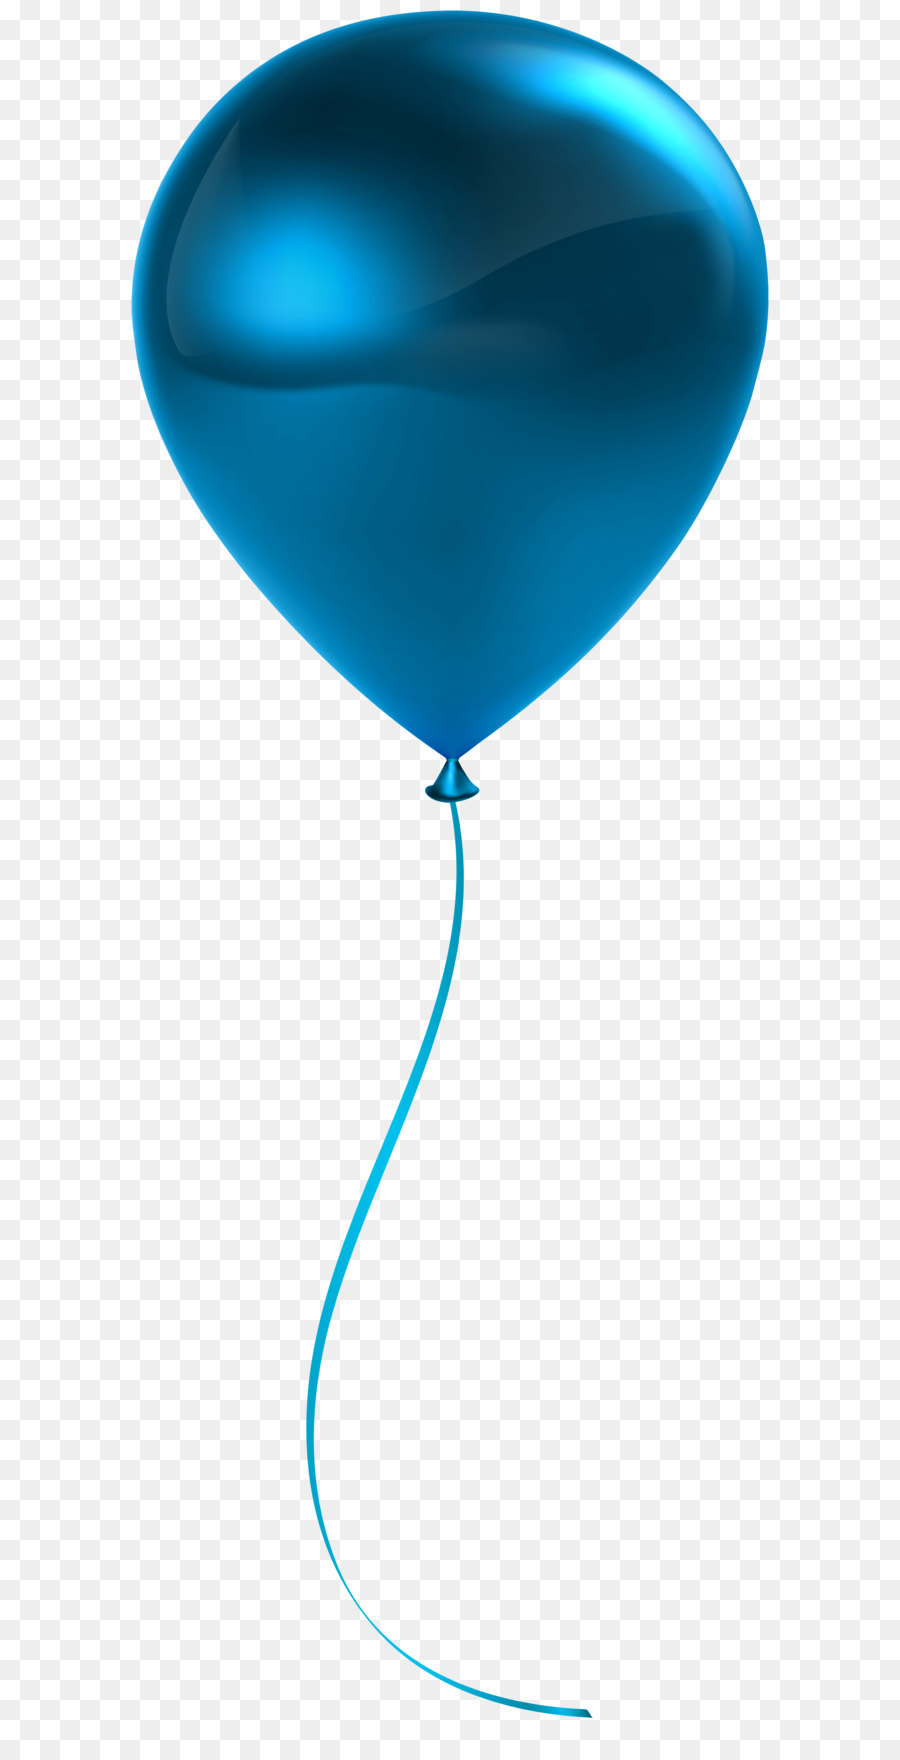 Blue Balloon Clip art - Single Blue Balloon Transparent Clip Art png download - 2983*8000 - Free Transparent Balloon png Download.